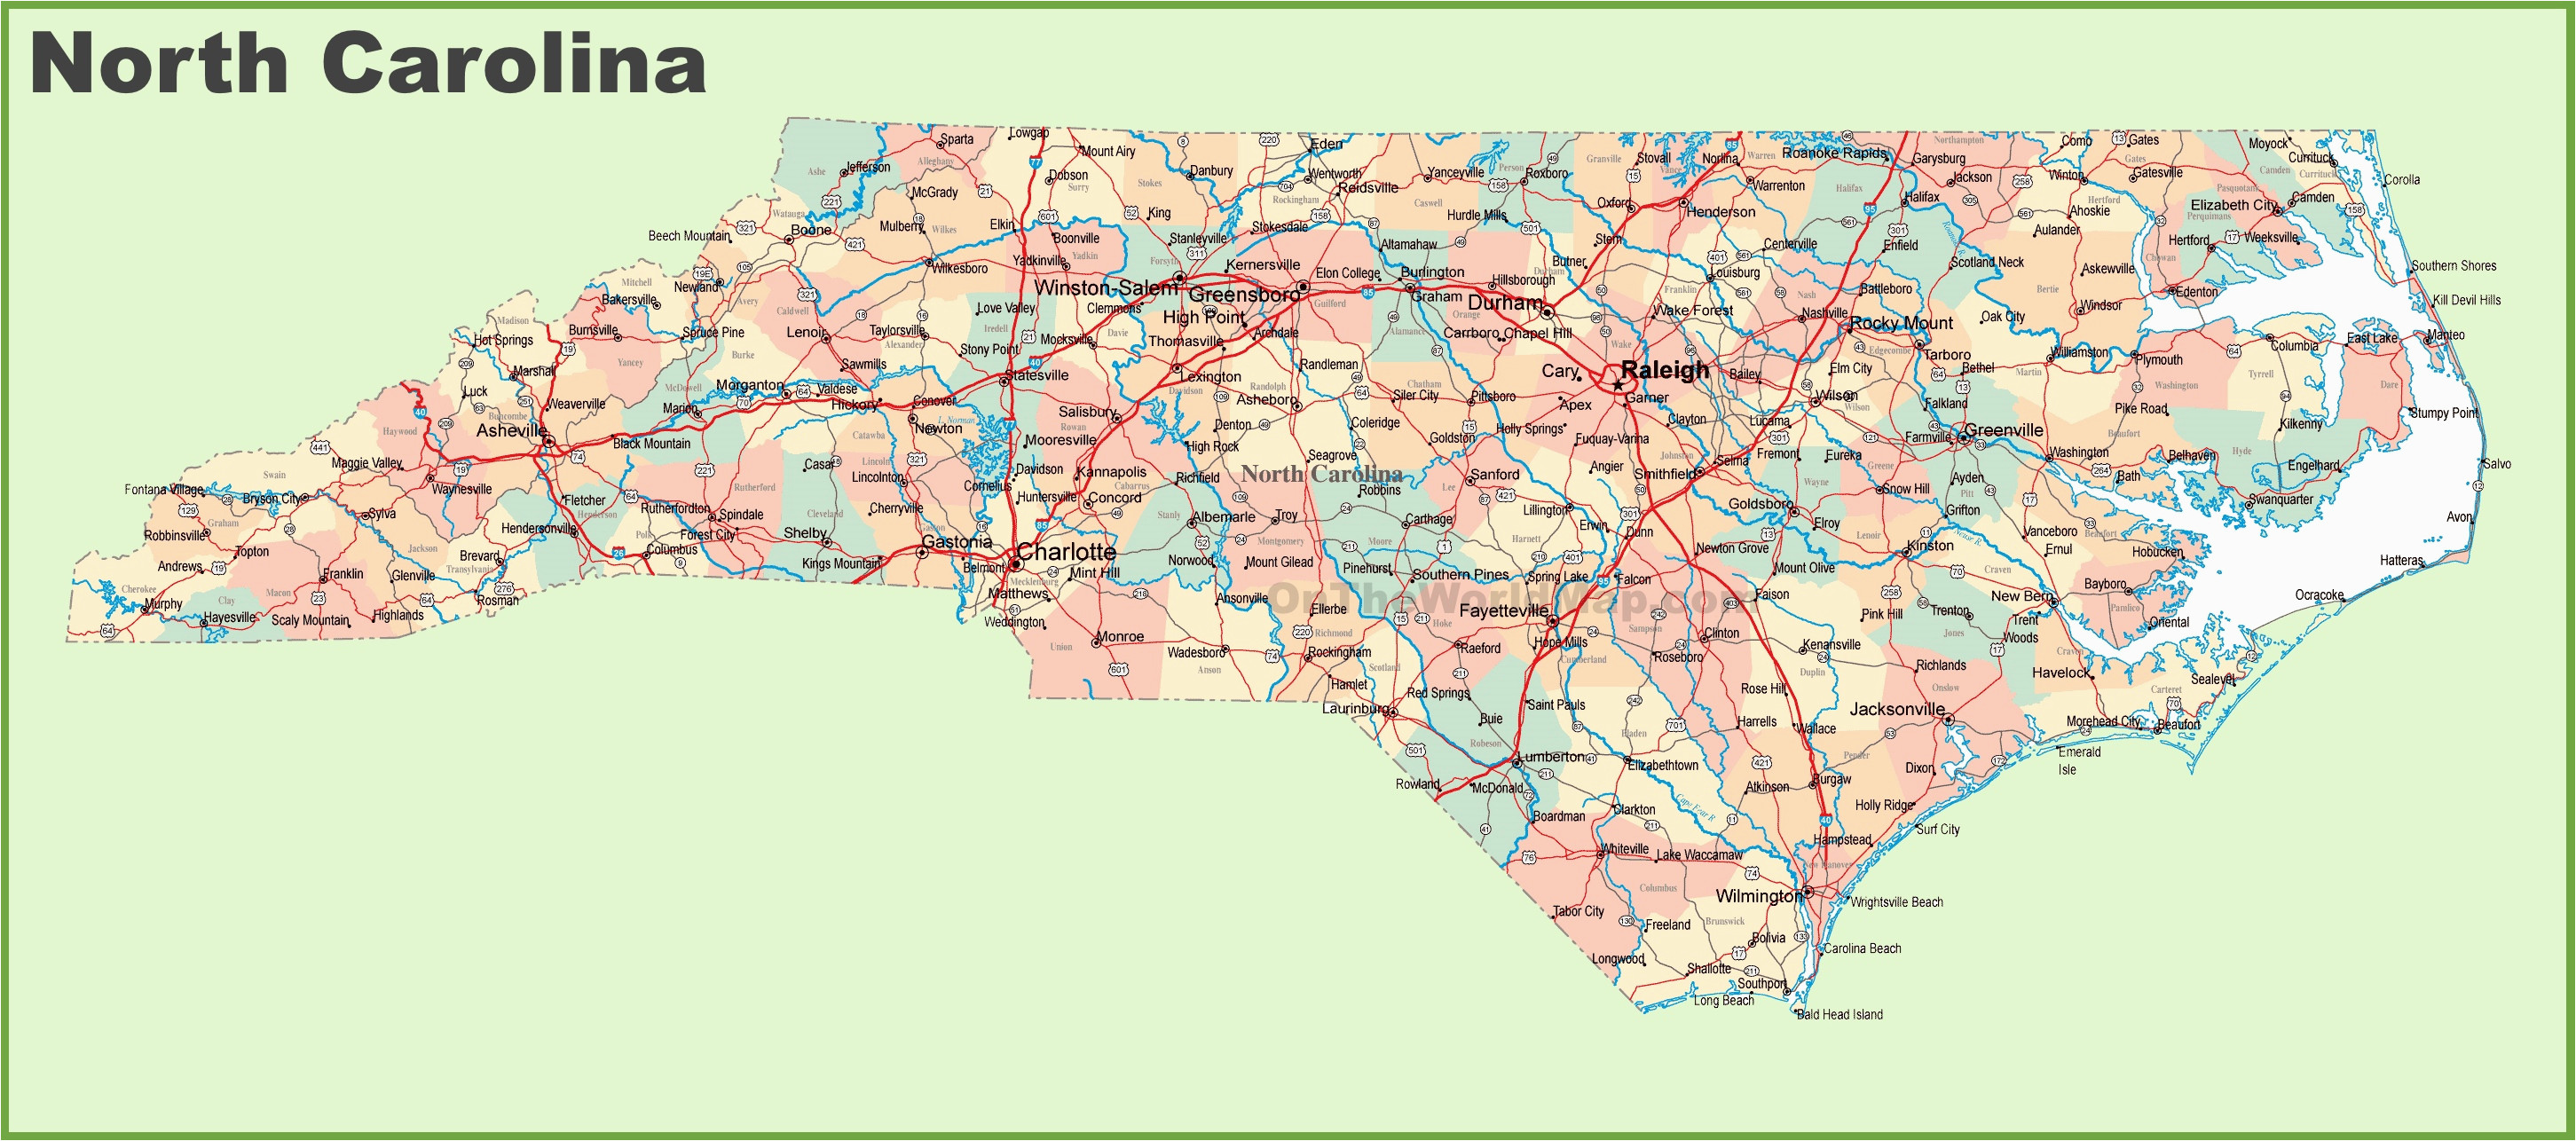 North Carolina City and County Map Road Map Of north Carolina with Cities